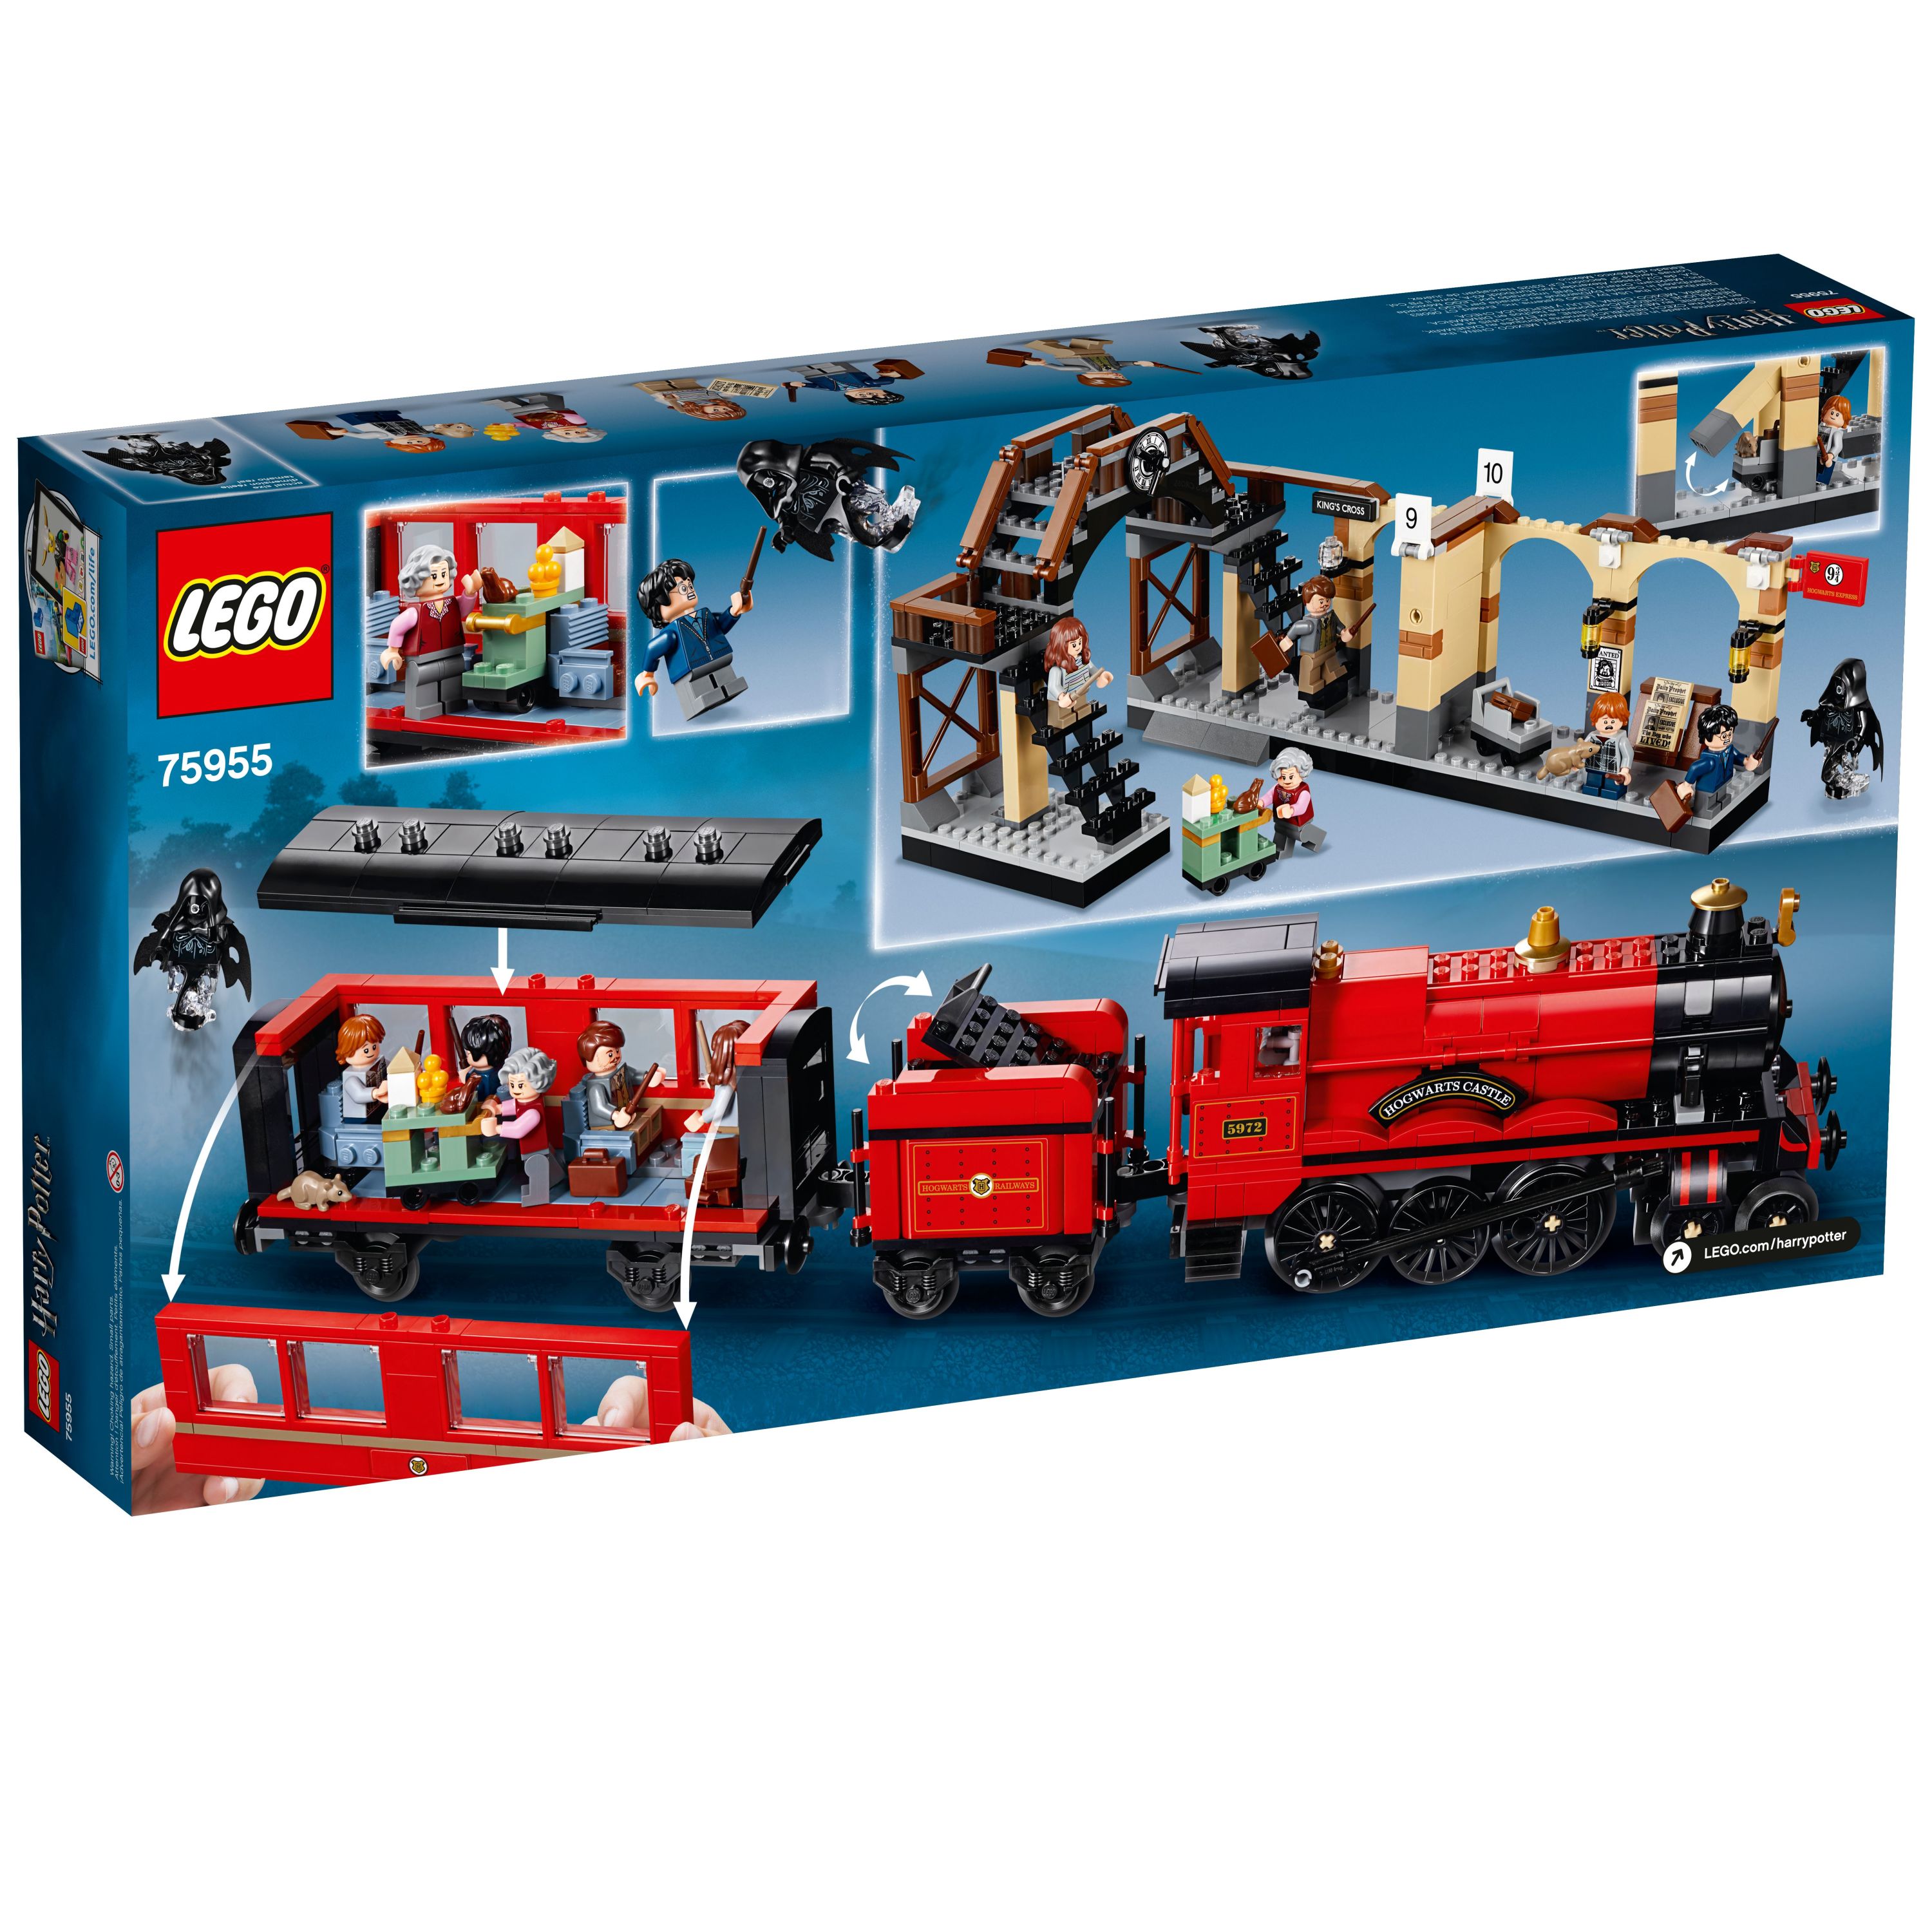 LEGO Harry Potter Hogwarts Express 75955 Toy Model Train Building Set - image 4 of 5